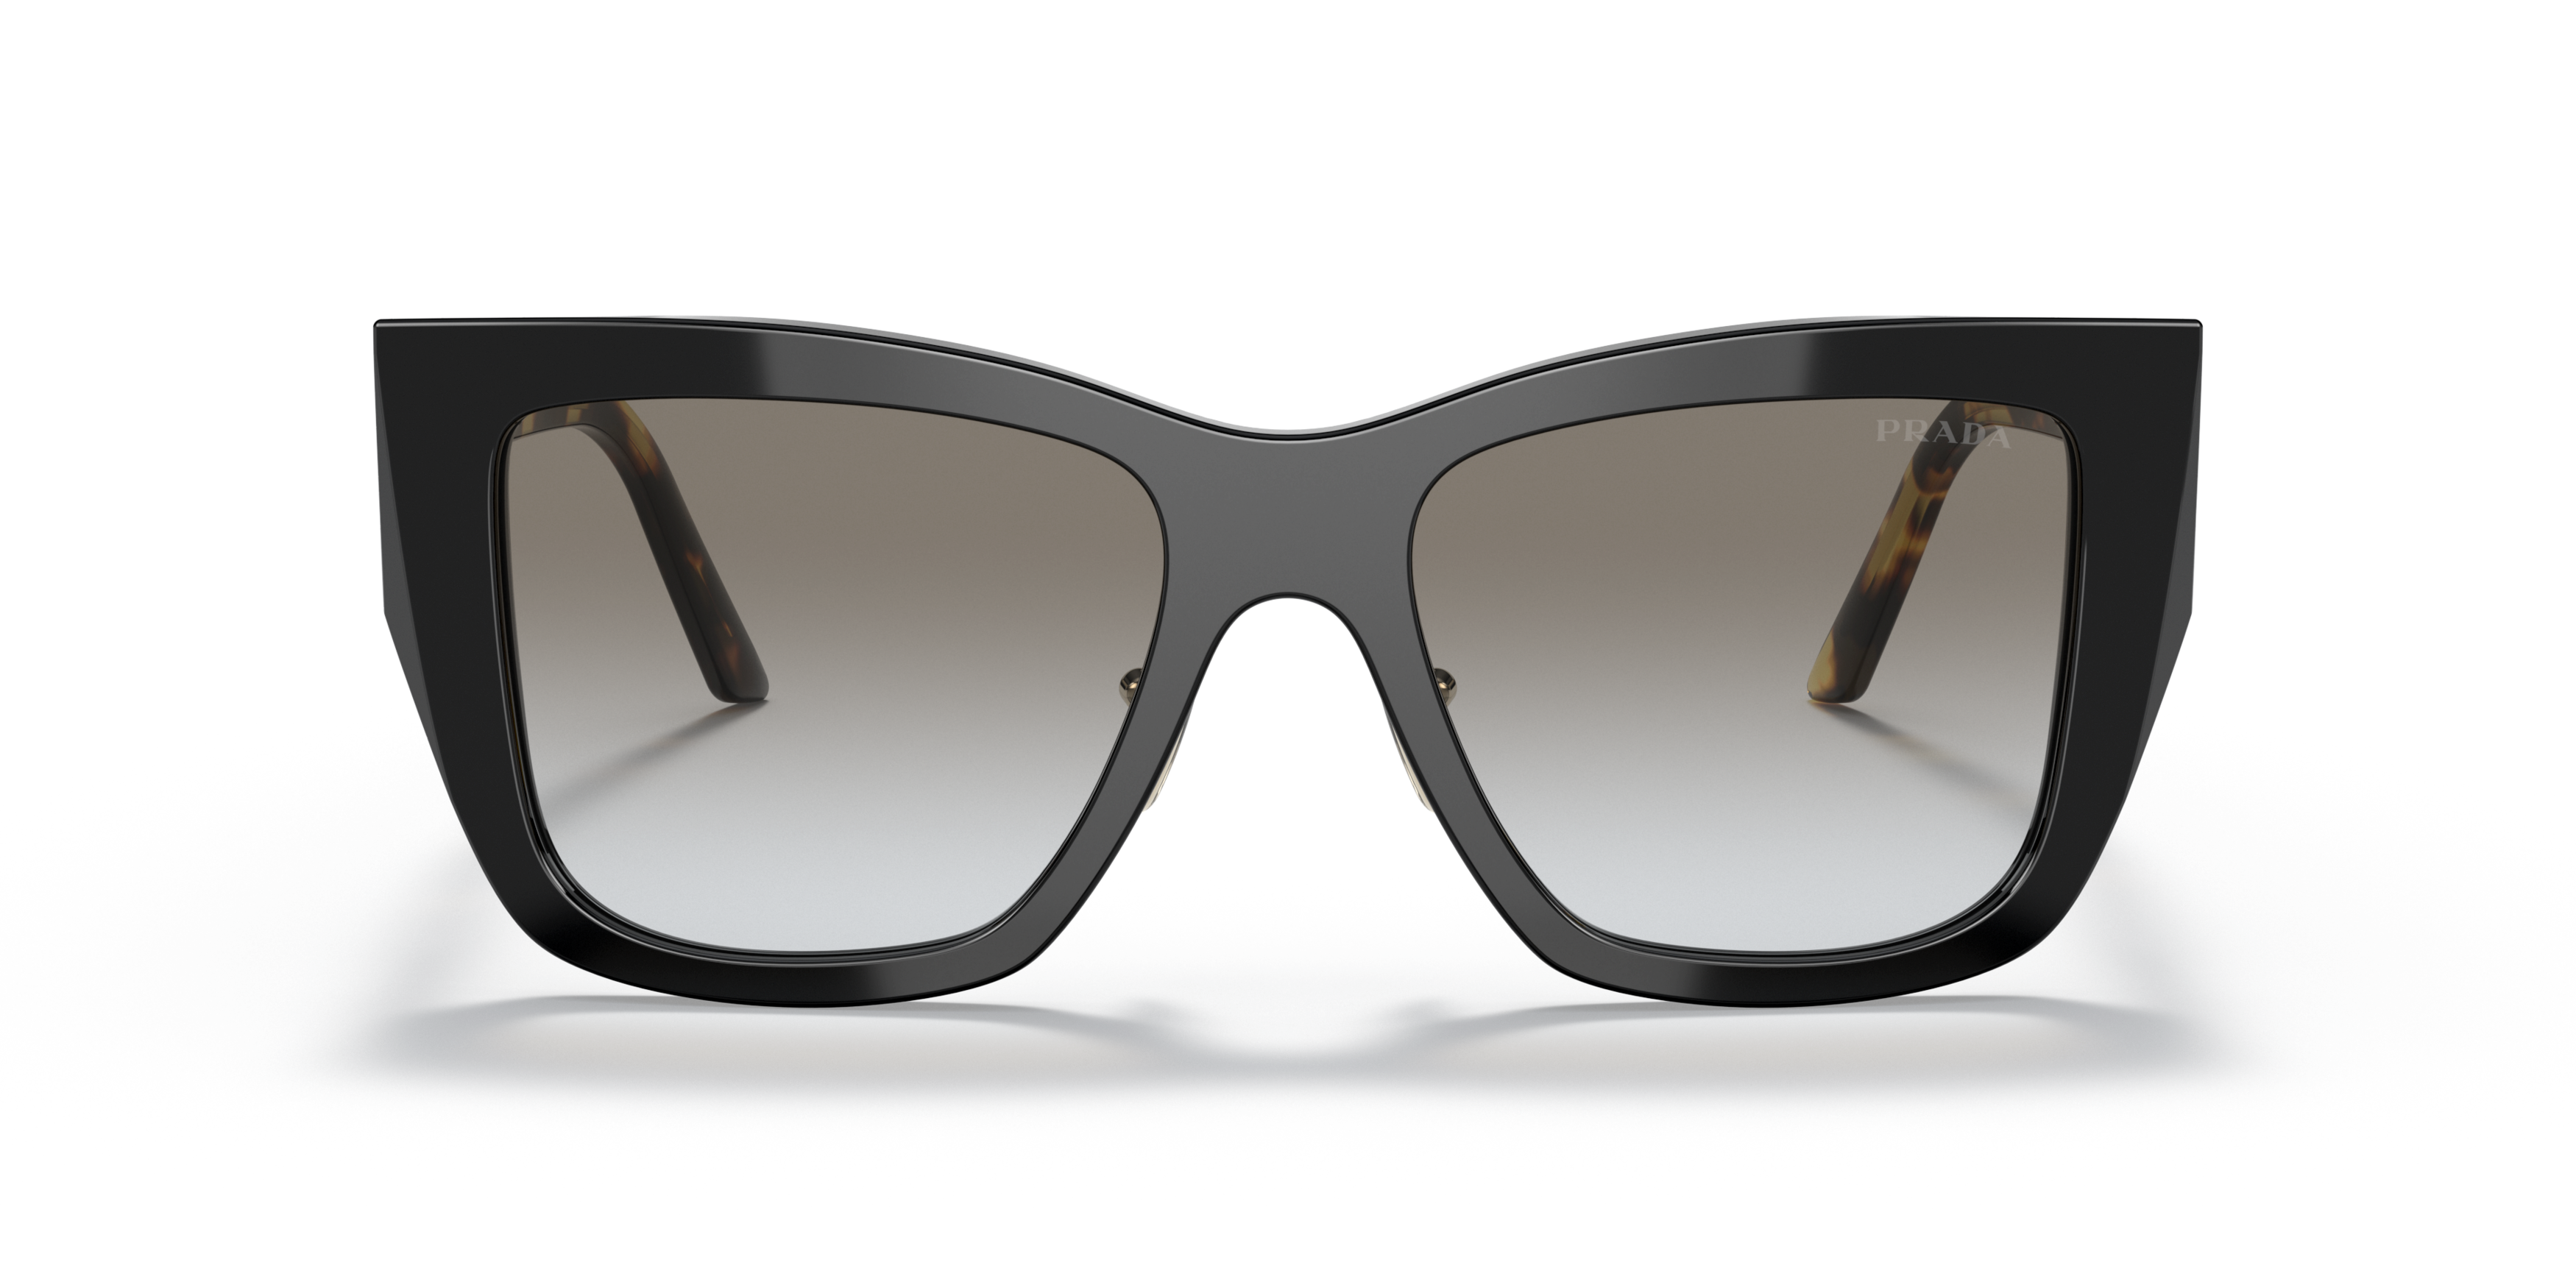 How to spot genuine or fake Prada Sunglasses - usedlux - Quora